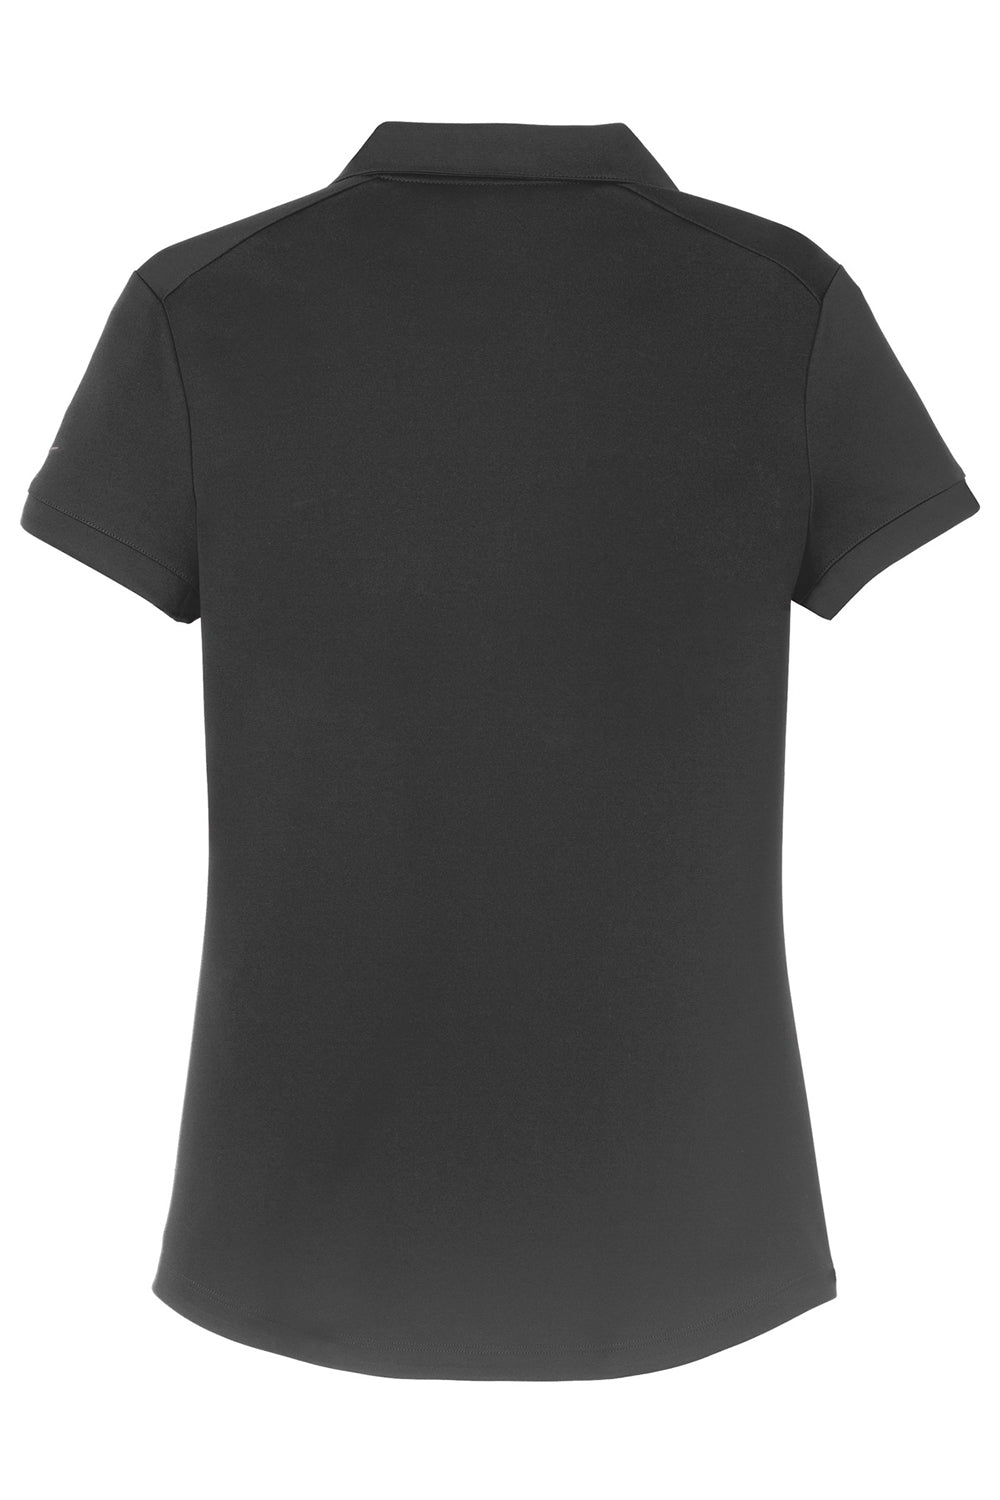 Nike 811807 Womens Players Dri-Fit Moisture Wicking Short Sleeve Polo Shirt Black Flat Back